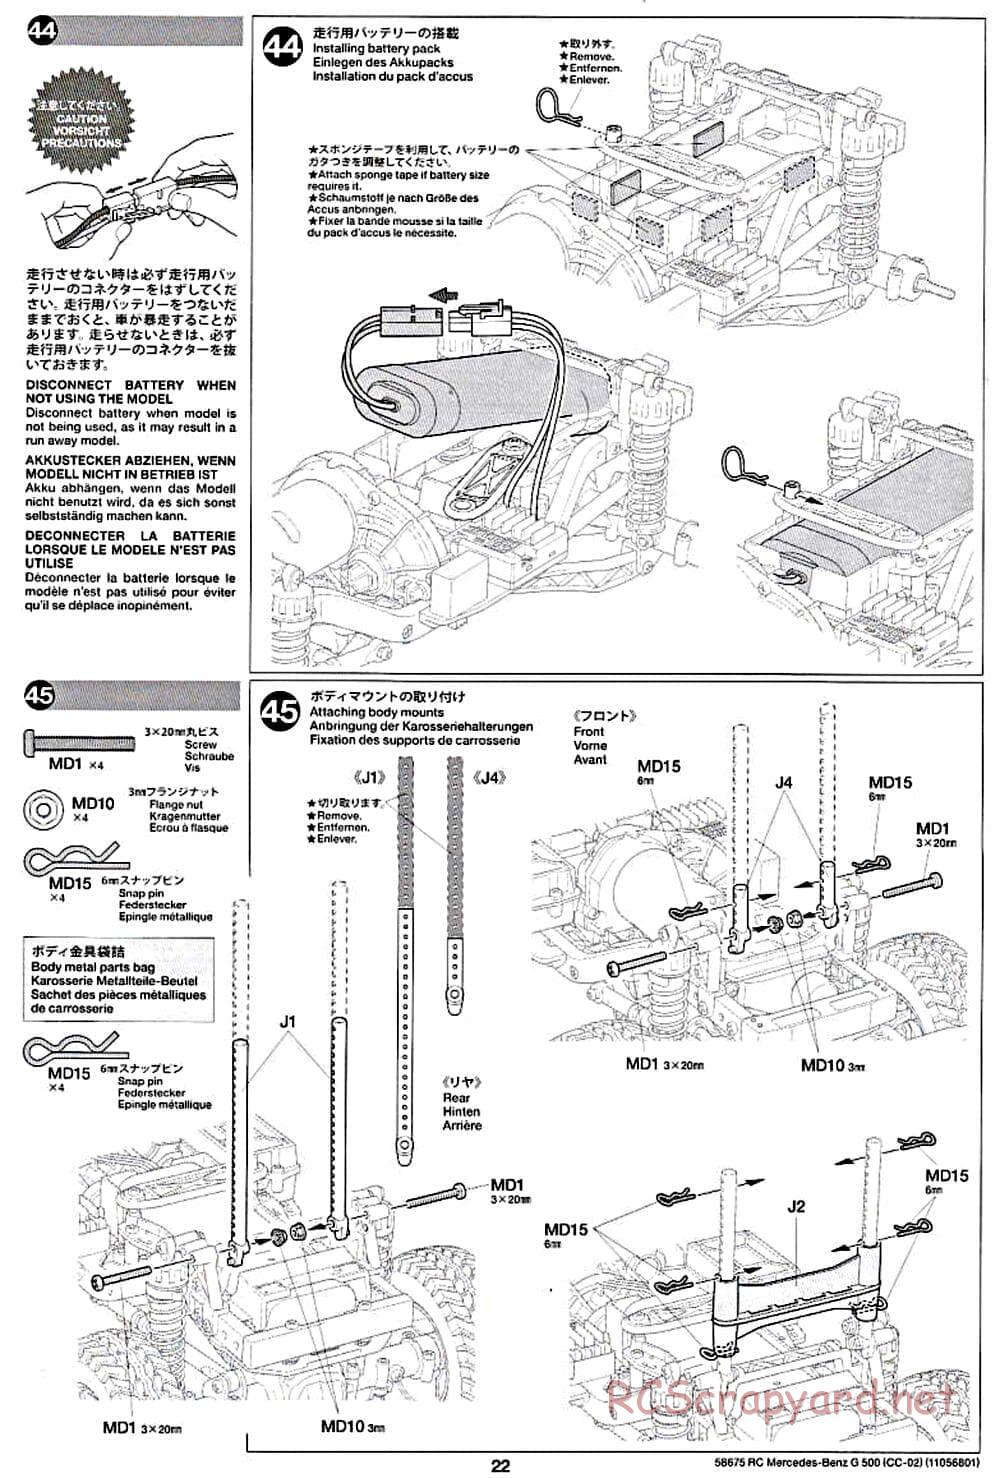 Tamiya - Mercedes-Benz G500 - CC-02 Chassis - Manual - Page 22